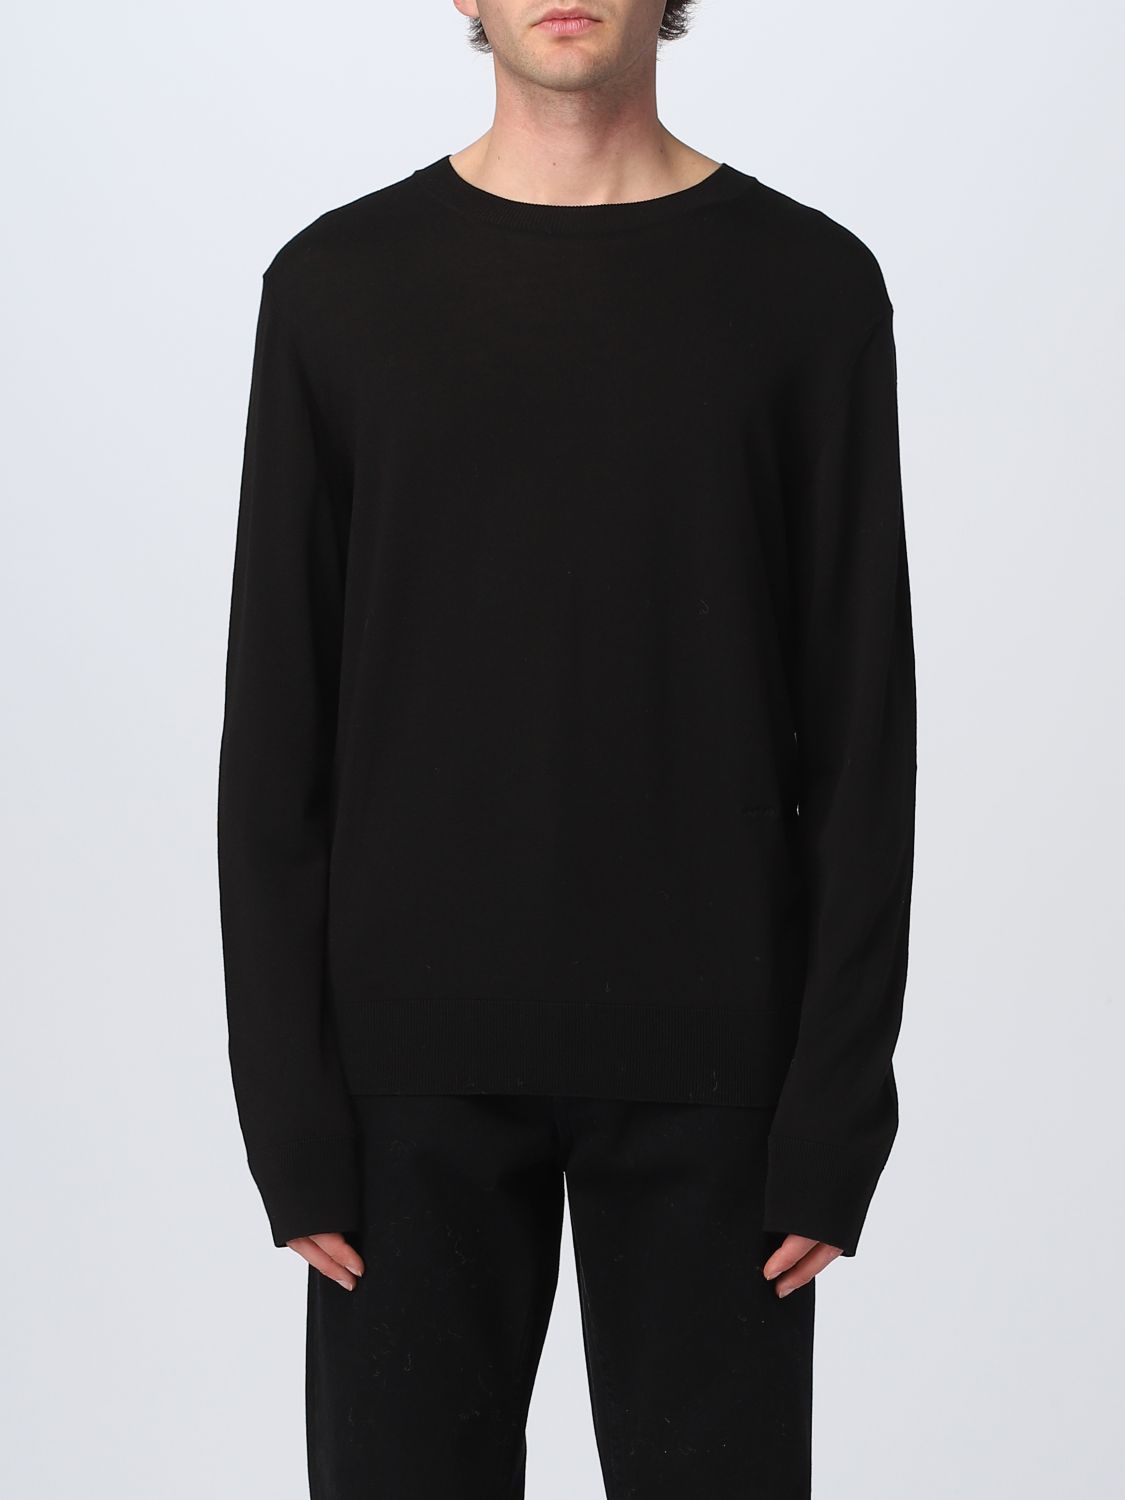 LANVIN: sweater for man - Black | Lanvin sweater RMPO0001K200P23 online ...